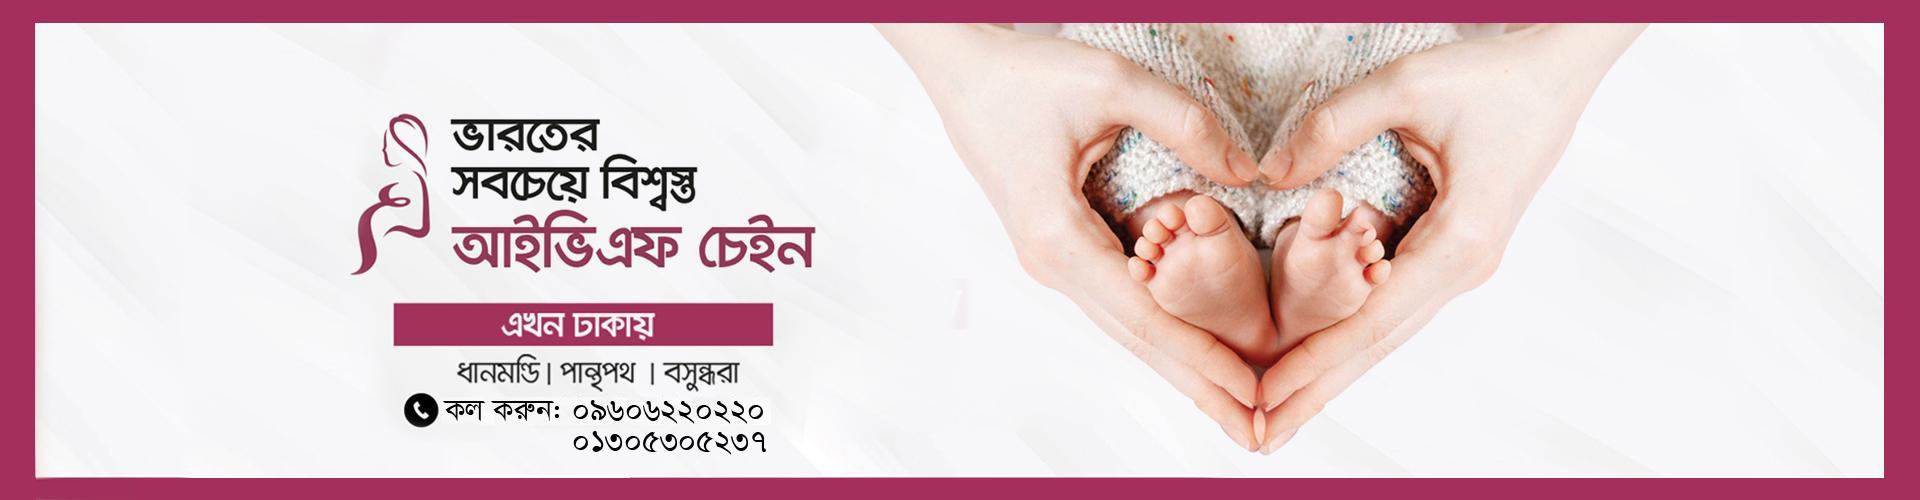 Best Ivf Center In Bangladesh Fertility Treatment Center 9348